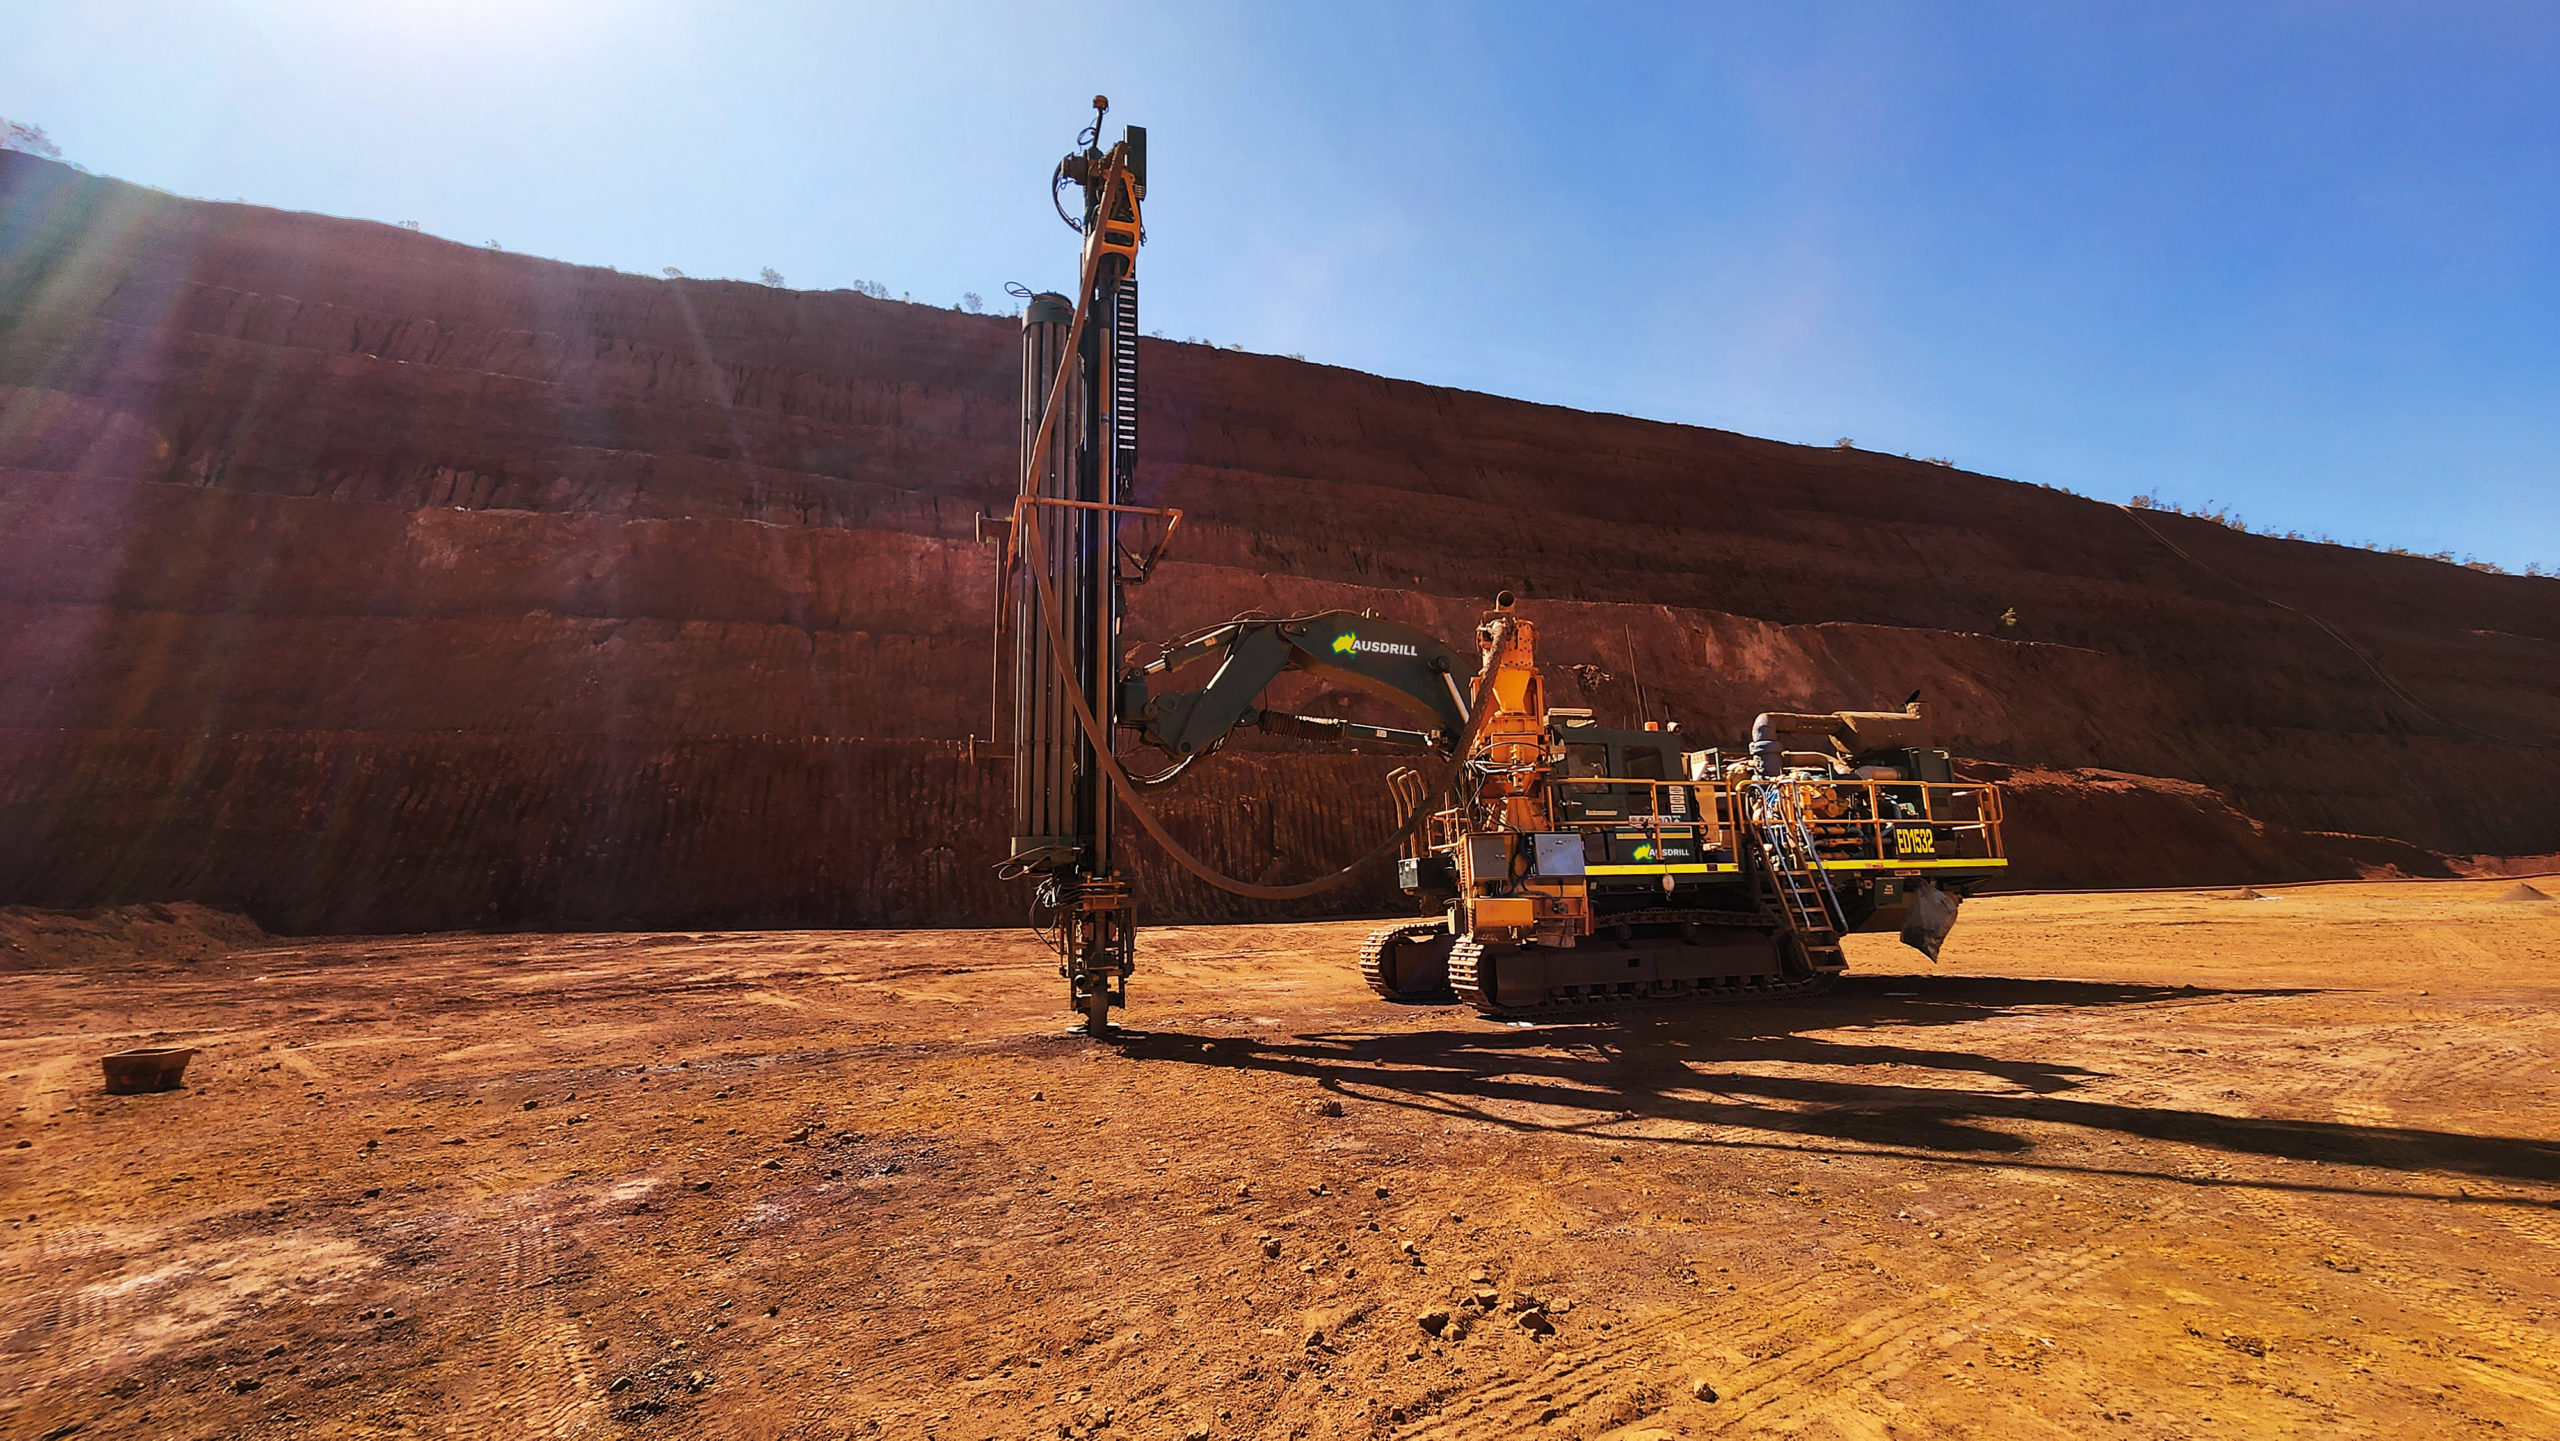 Ausdrill announces new strategic partnership with SITECH WA - International Mining